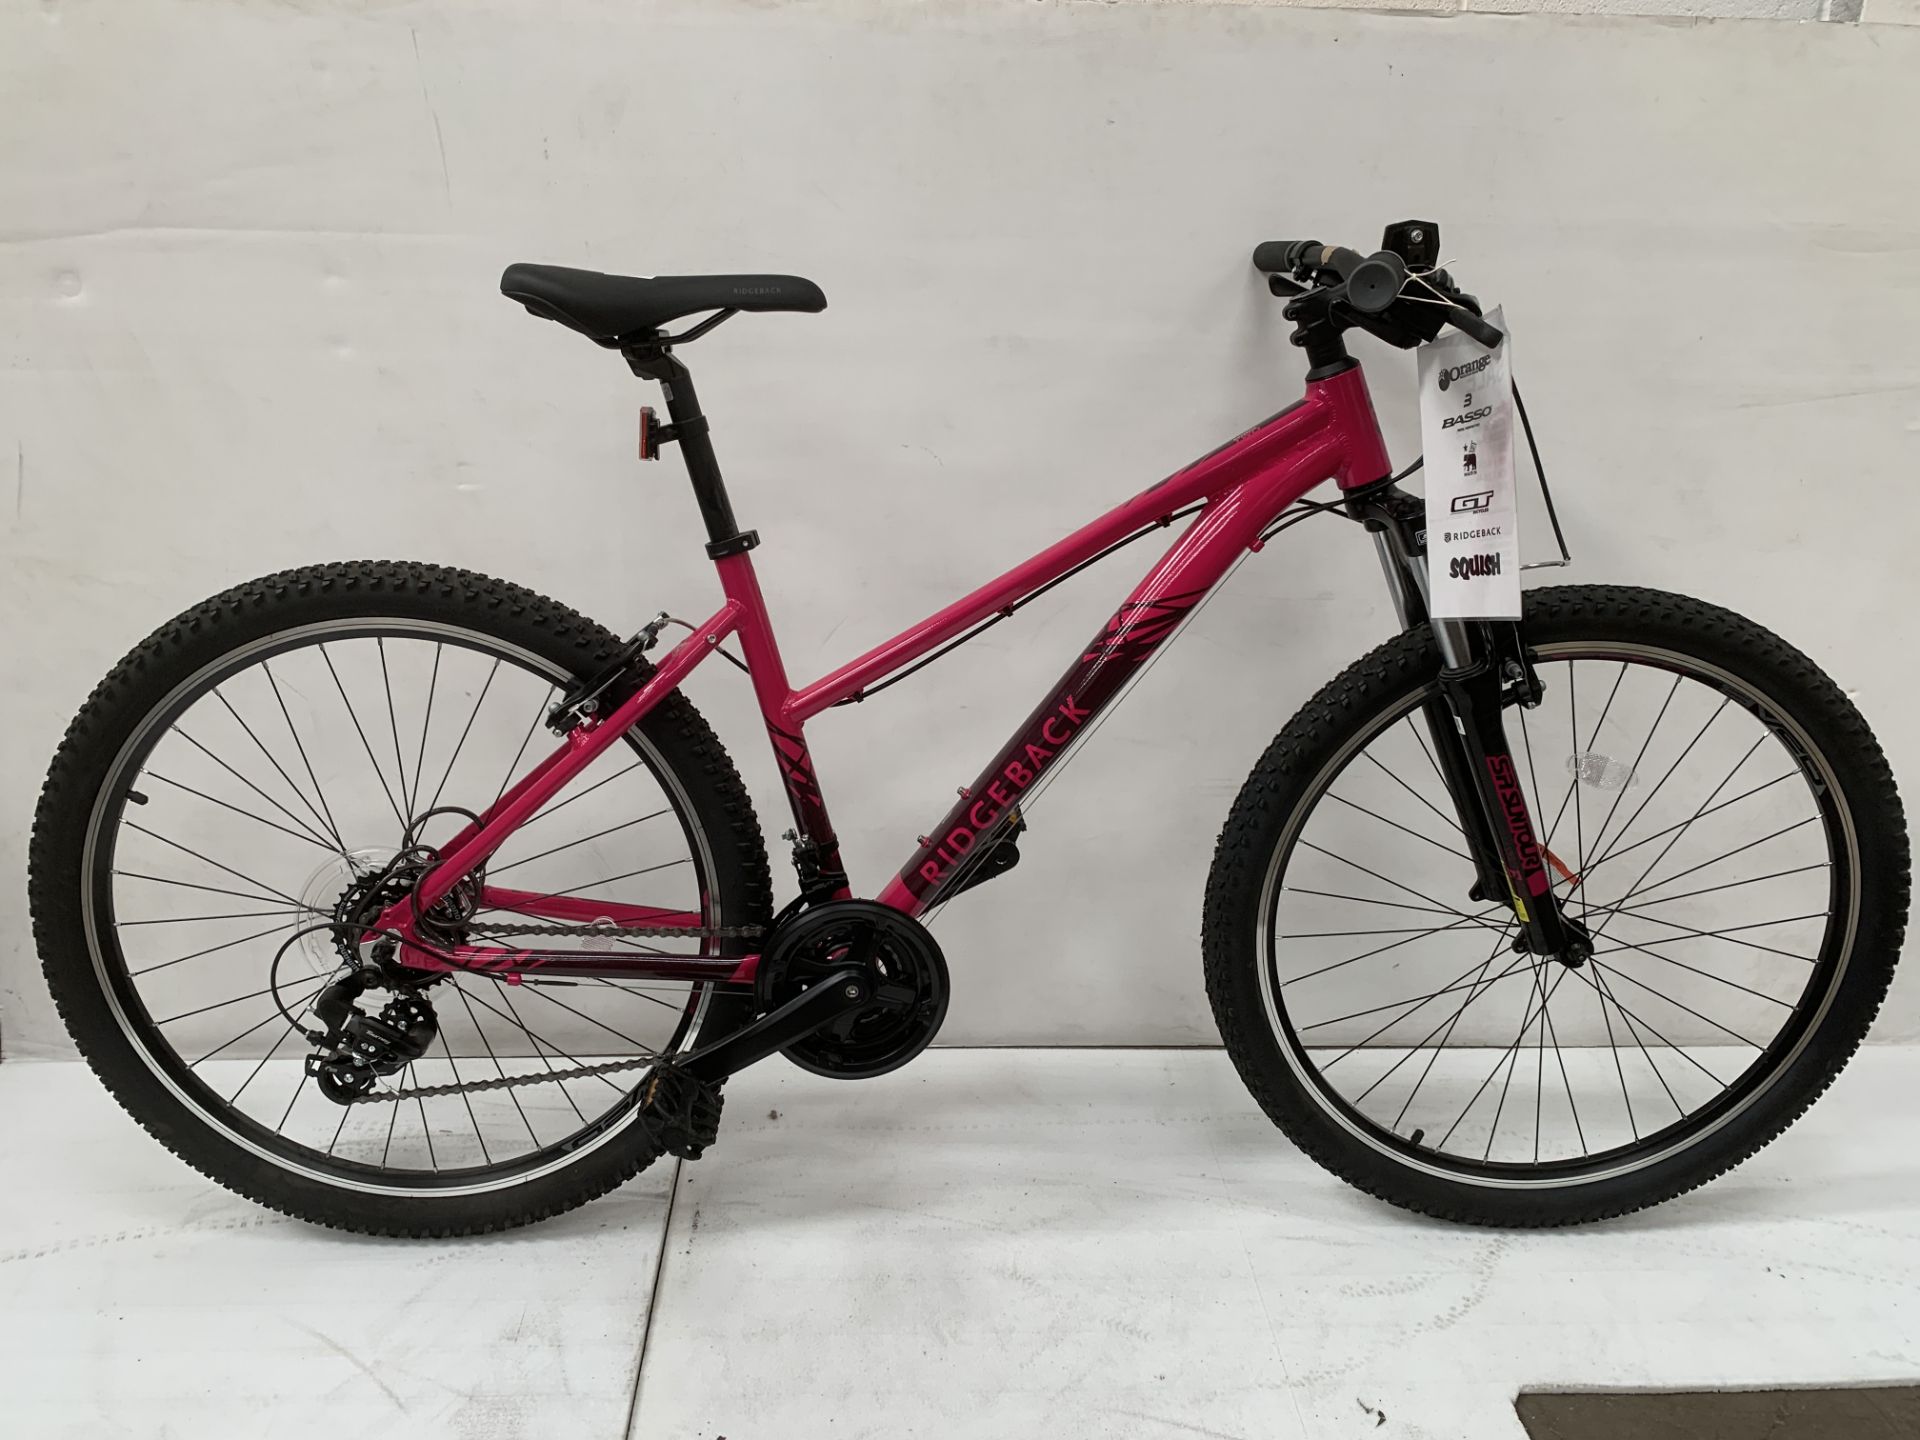 Ridgeback Terrain 2 'Pink' 17" Bicycle. RRP £429